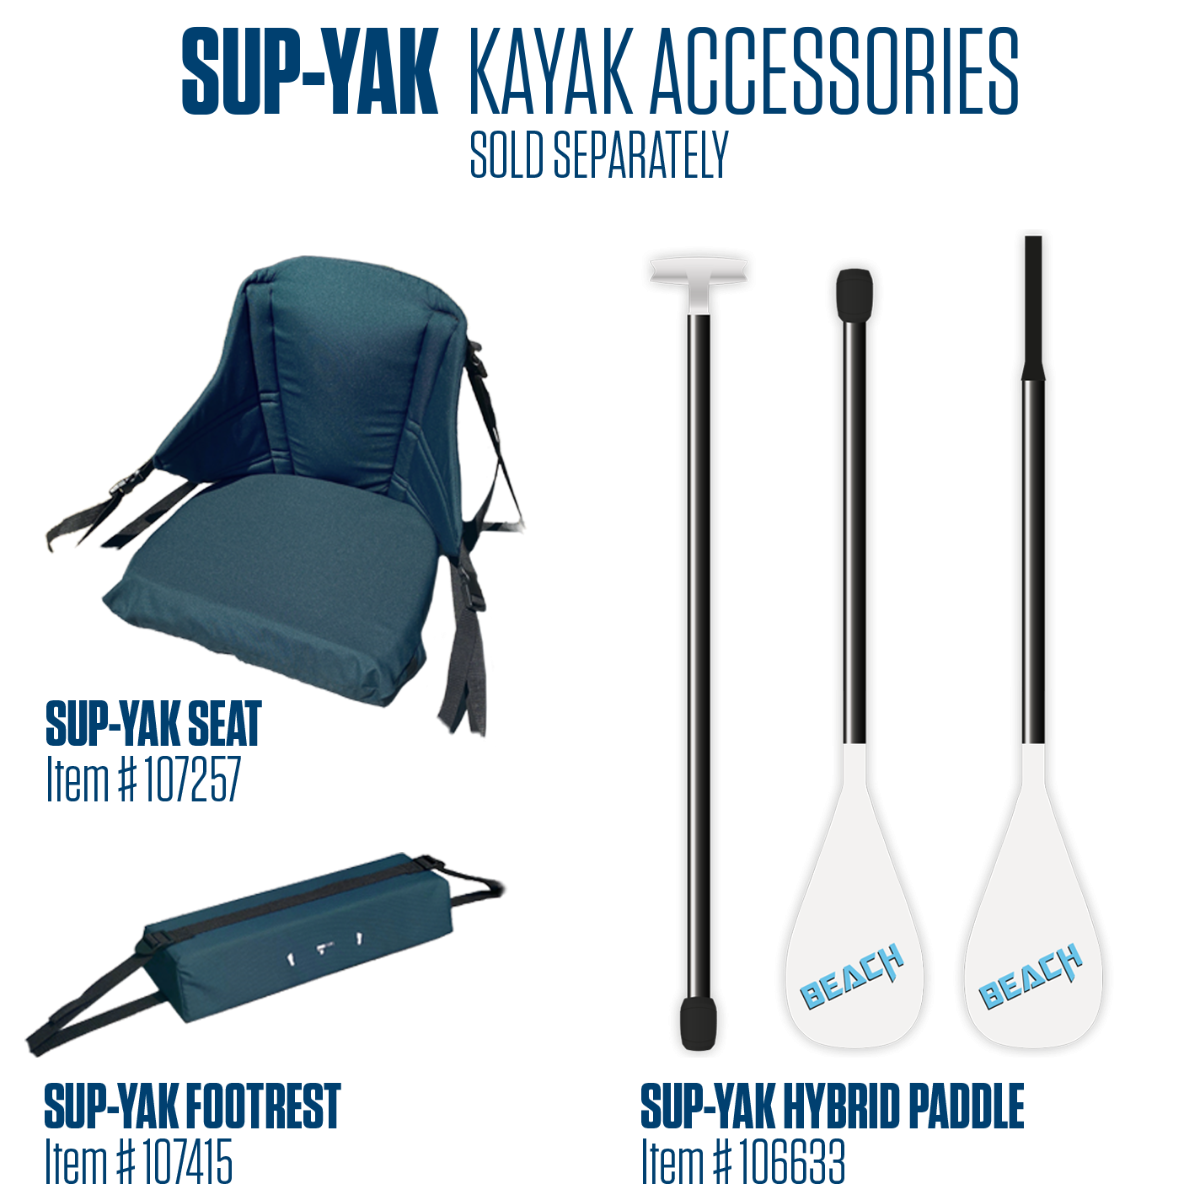 sup-yak- kayak accessories website eng 1